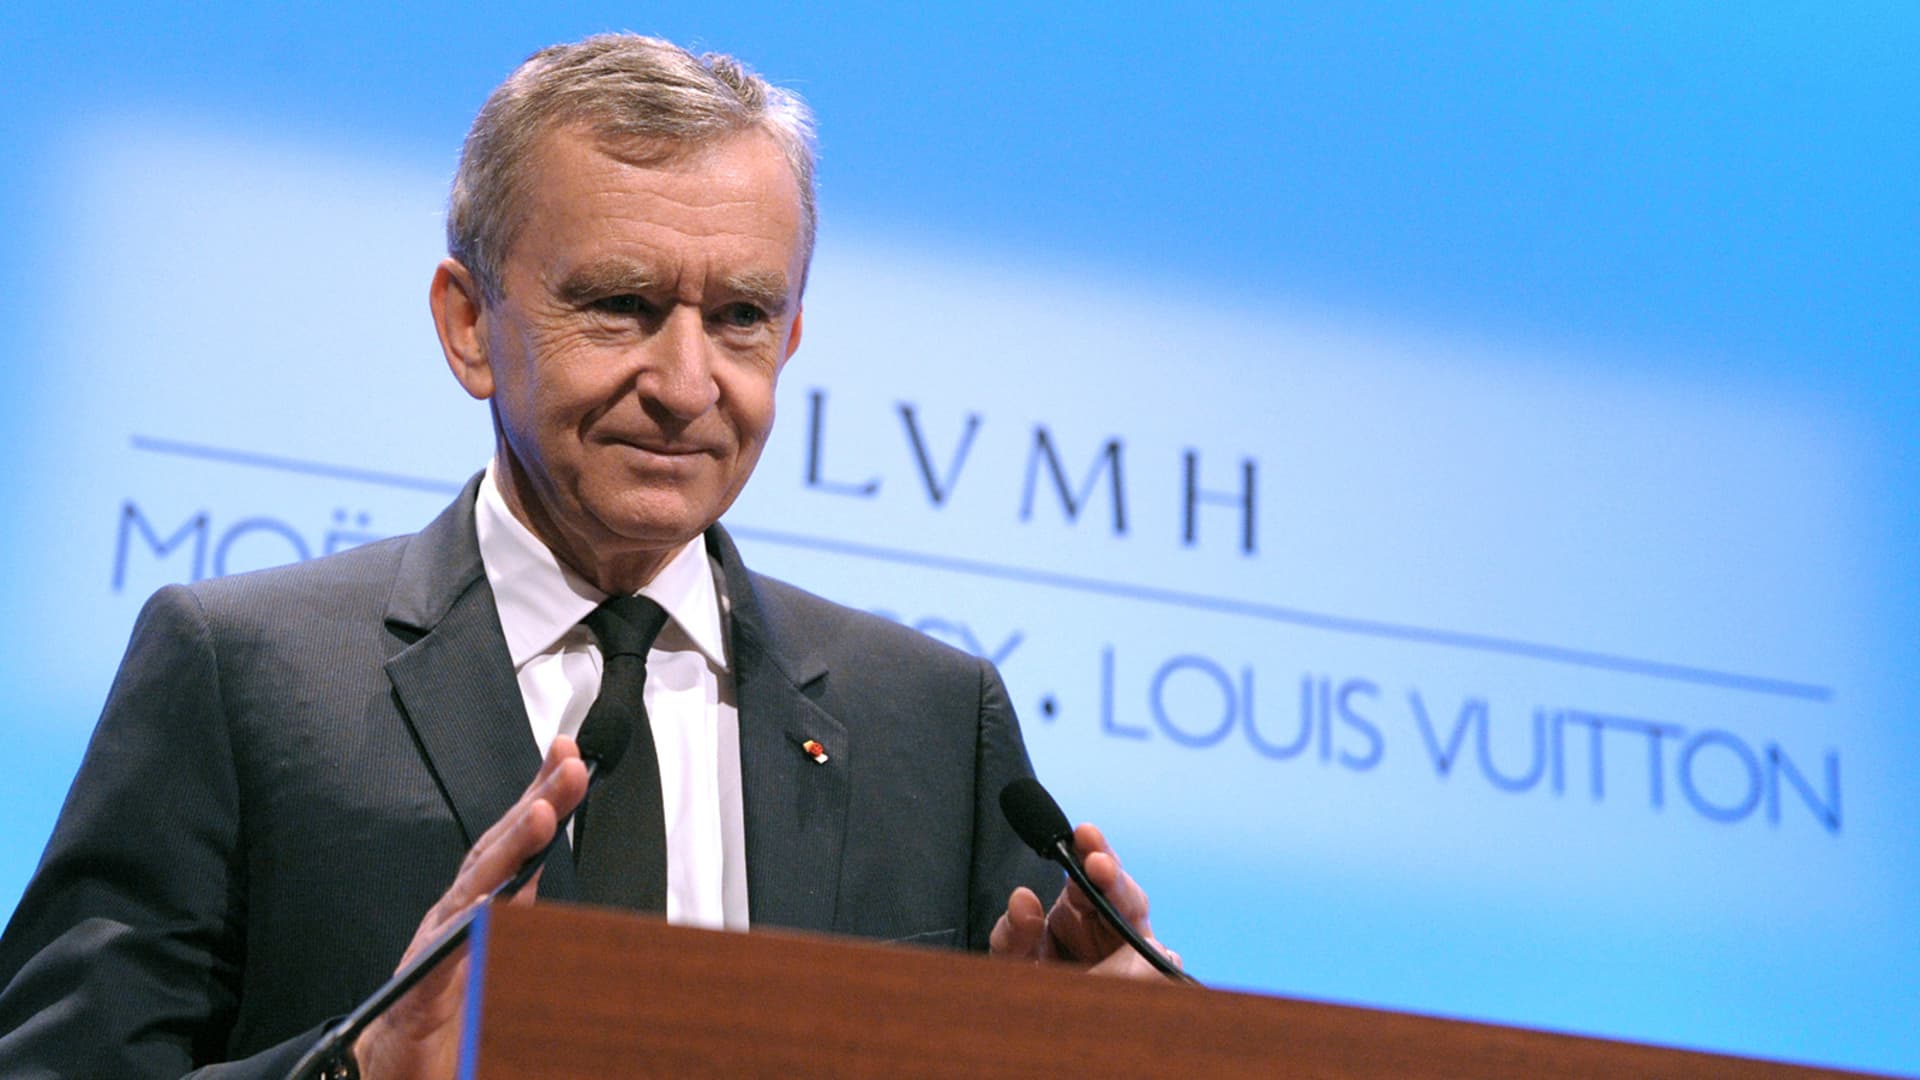 Bernard Arnault Secures LVMH Control for Next 30 Years